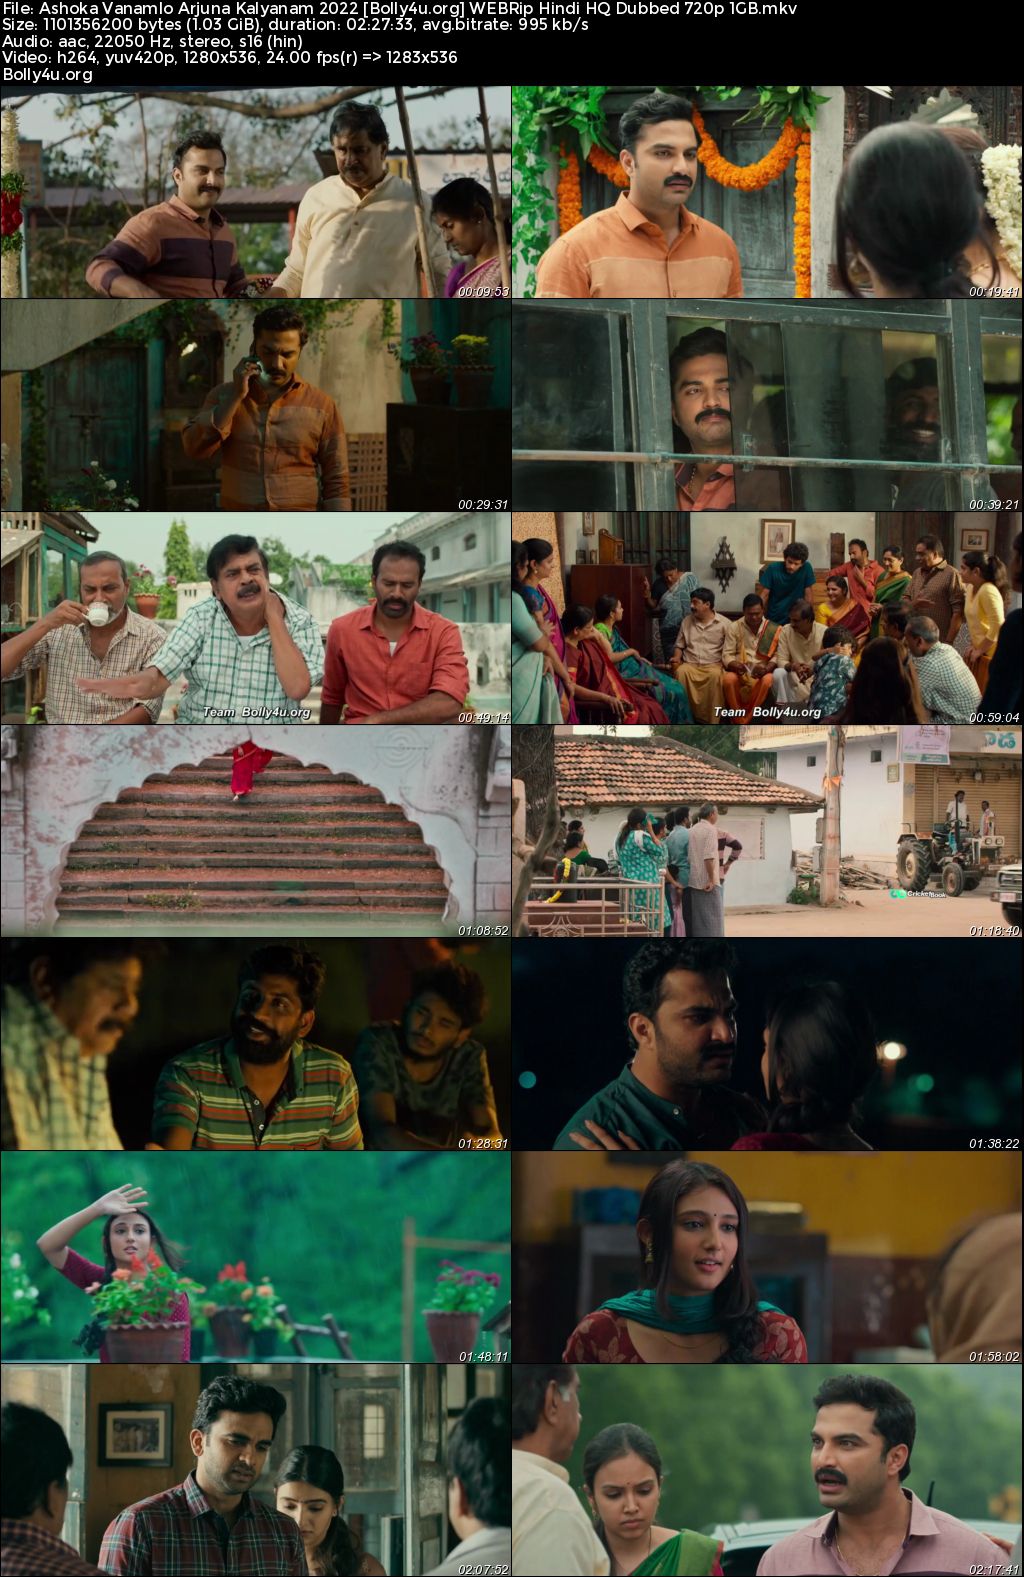 Ashoka Vanamlo Arjuna Kalyanam 2022 WEBRip Hindi HQ Dubbed Full Movie Download 1080p 720p 480p